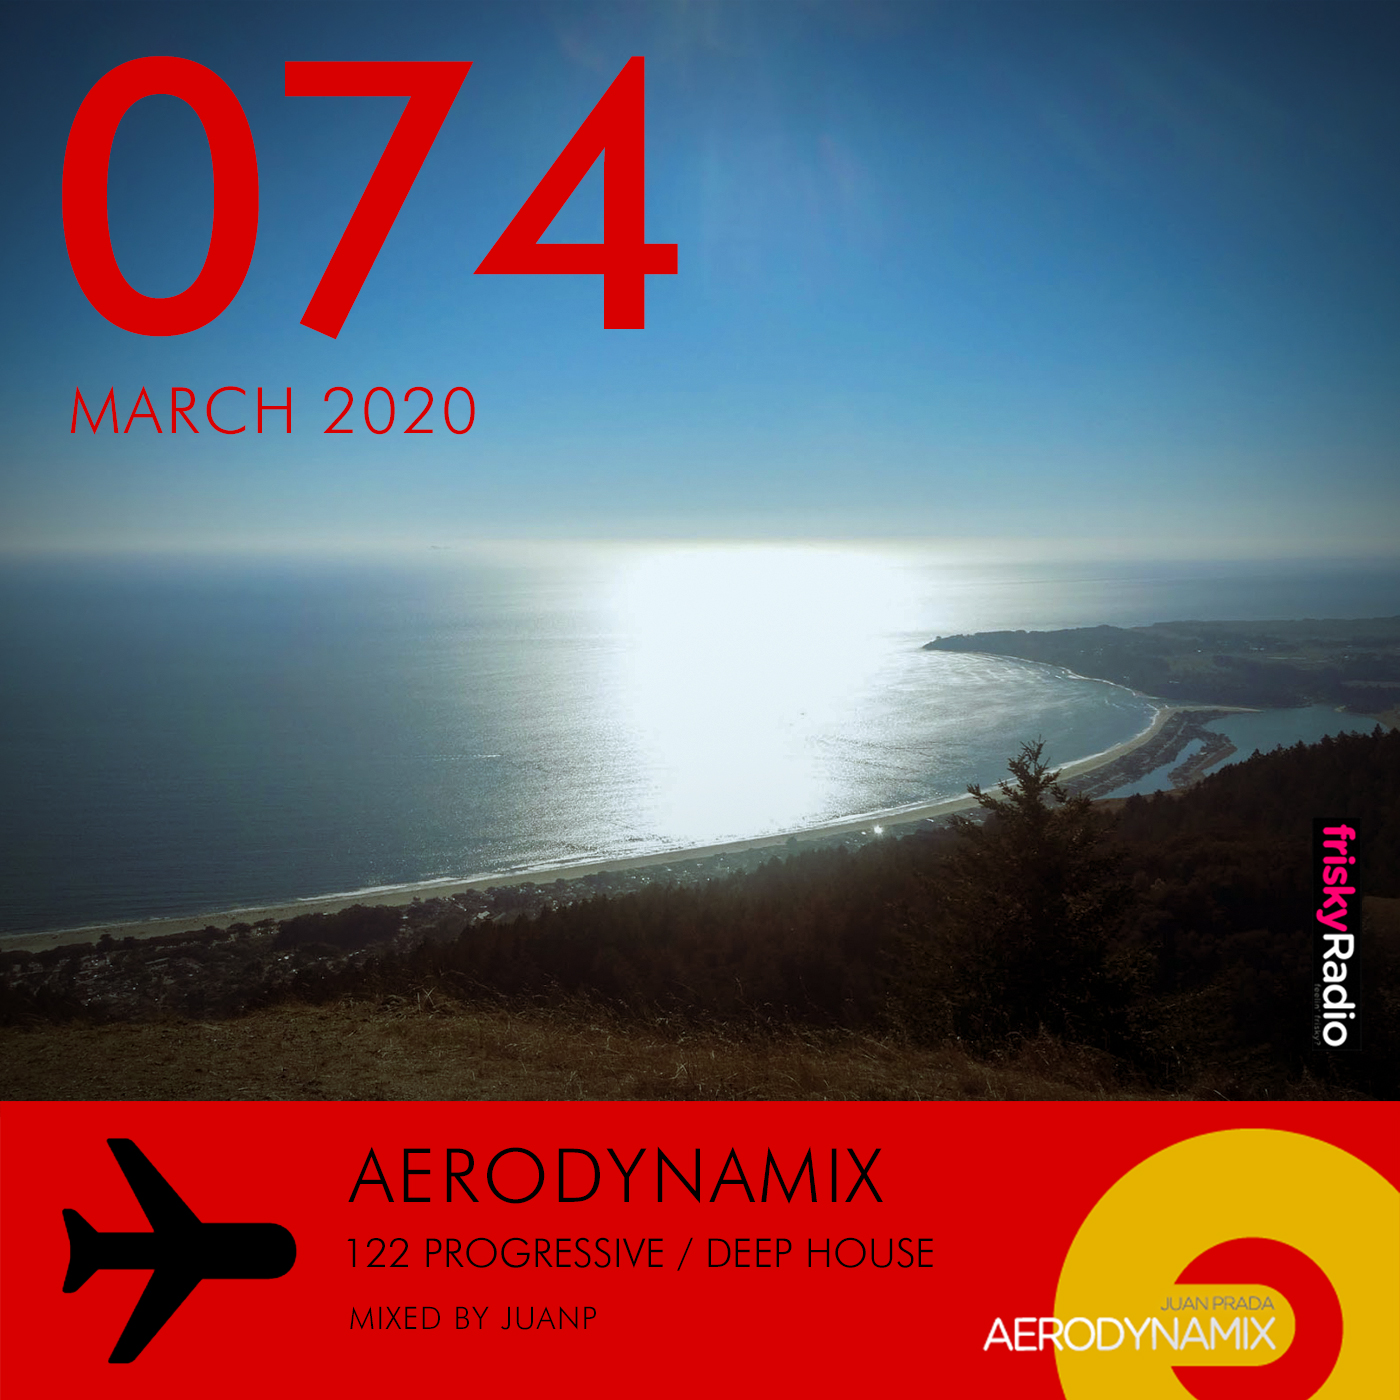 Aerodynamix 074 @ Frisky Radio March 2020 mixed by JuanP